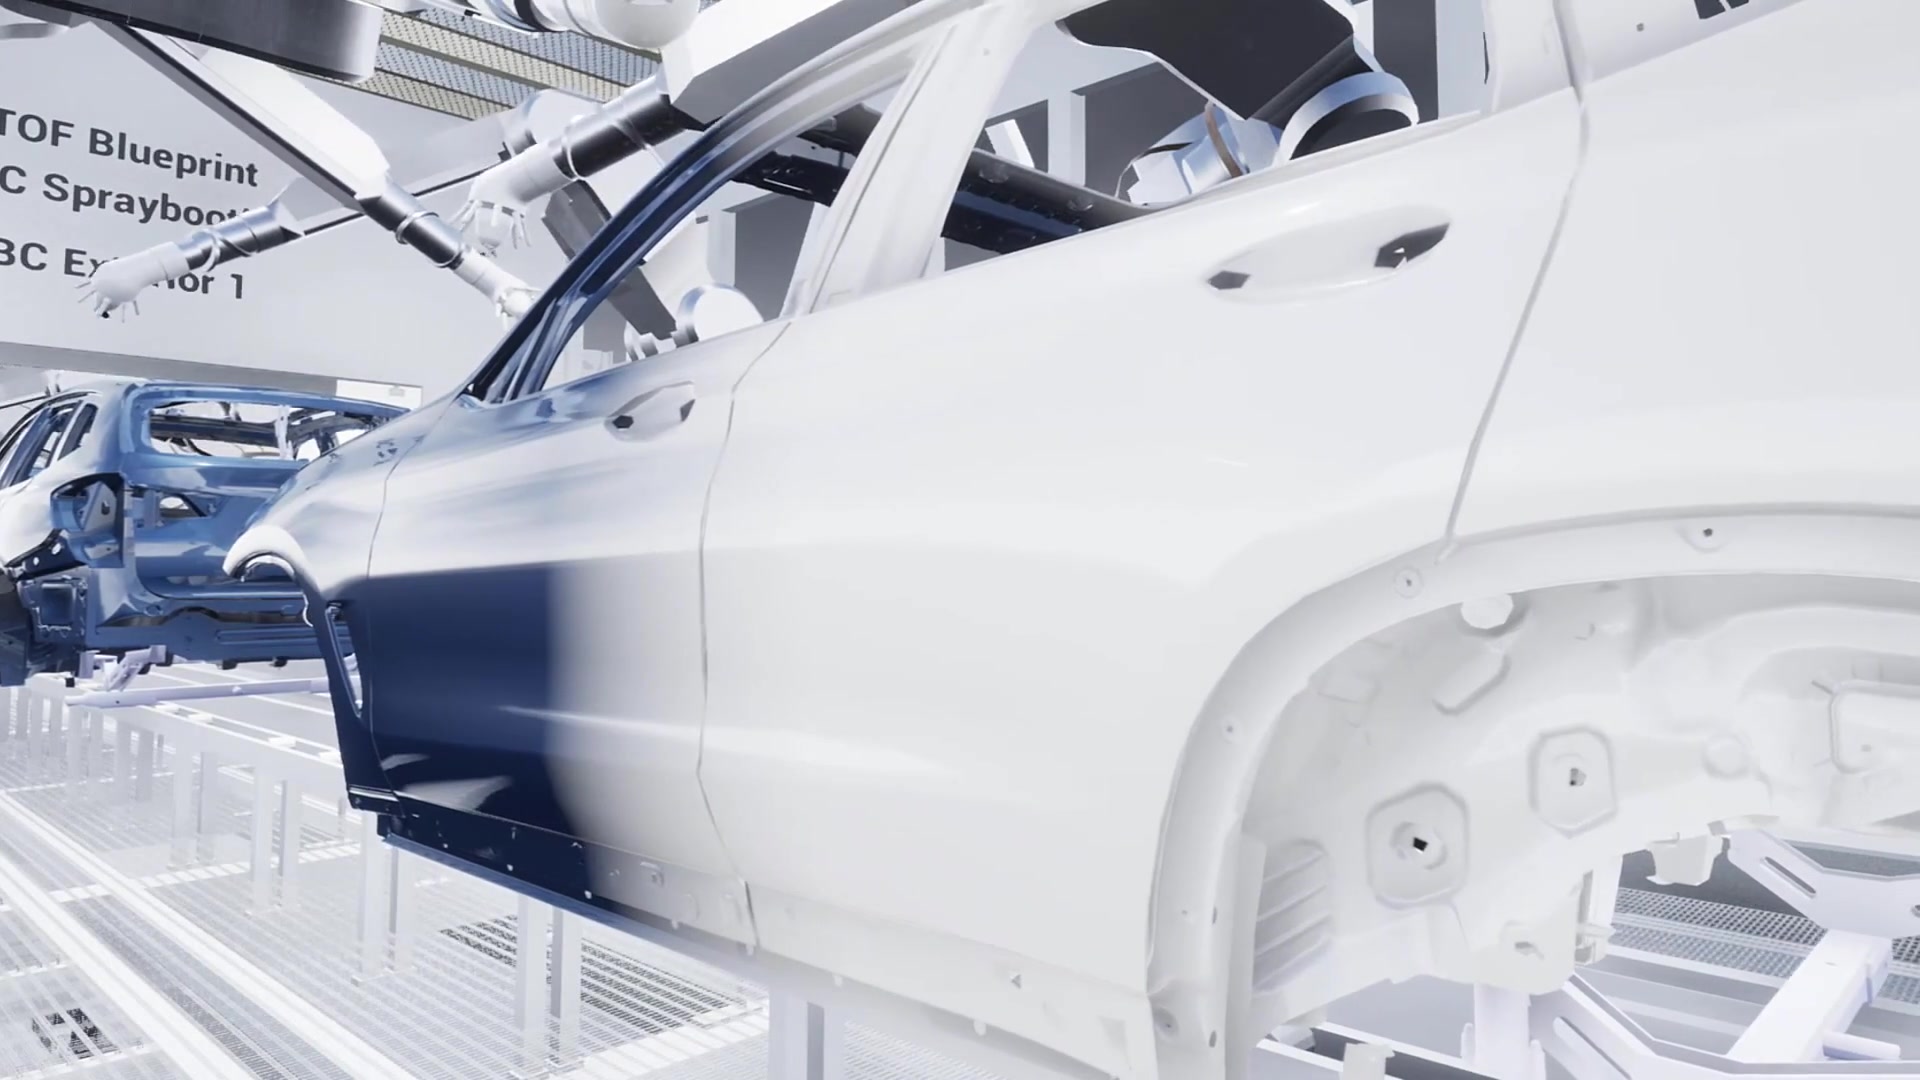 BMW VR production planing – Body Paintshop